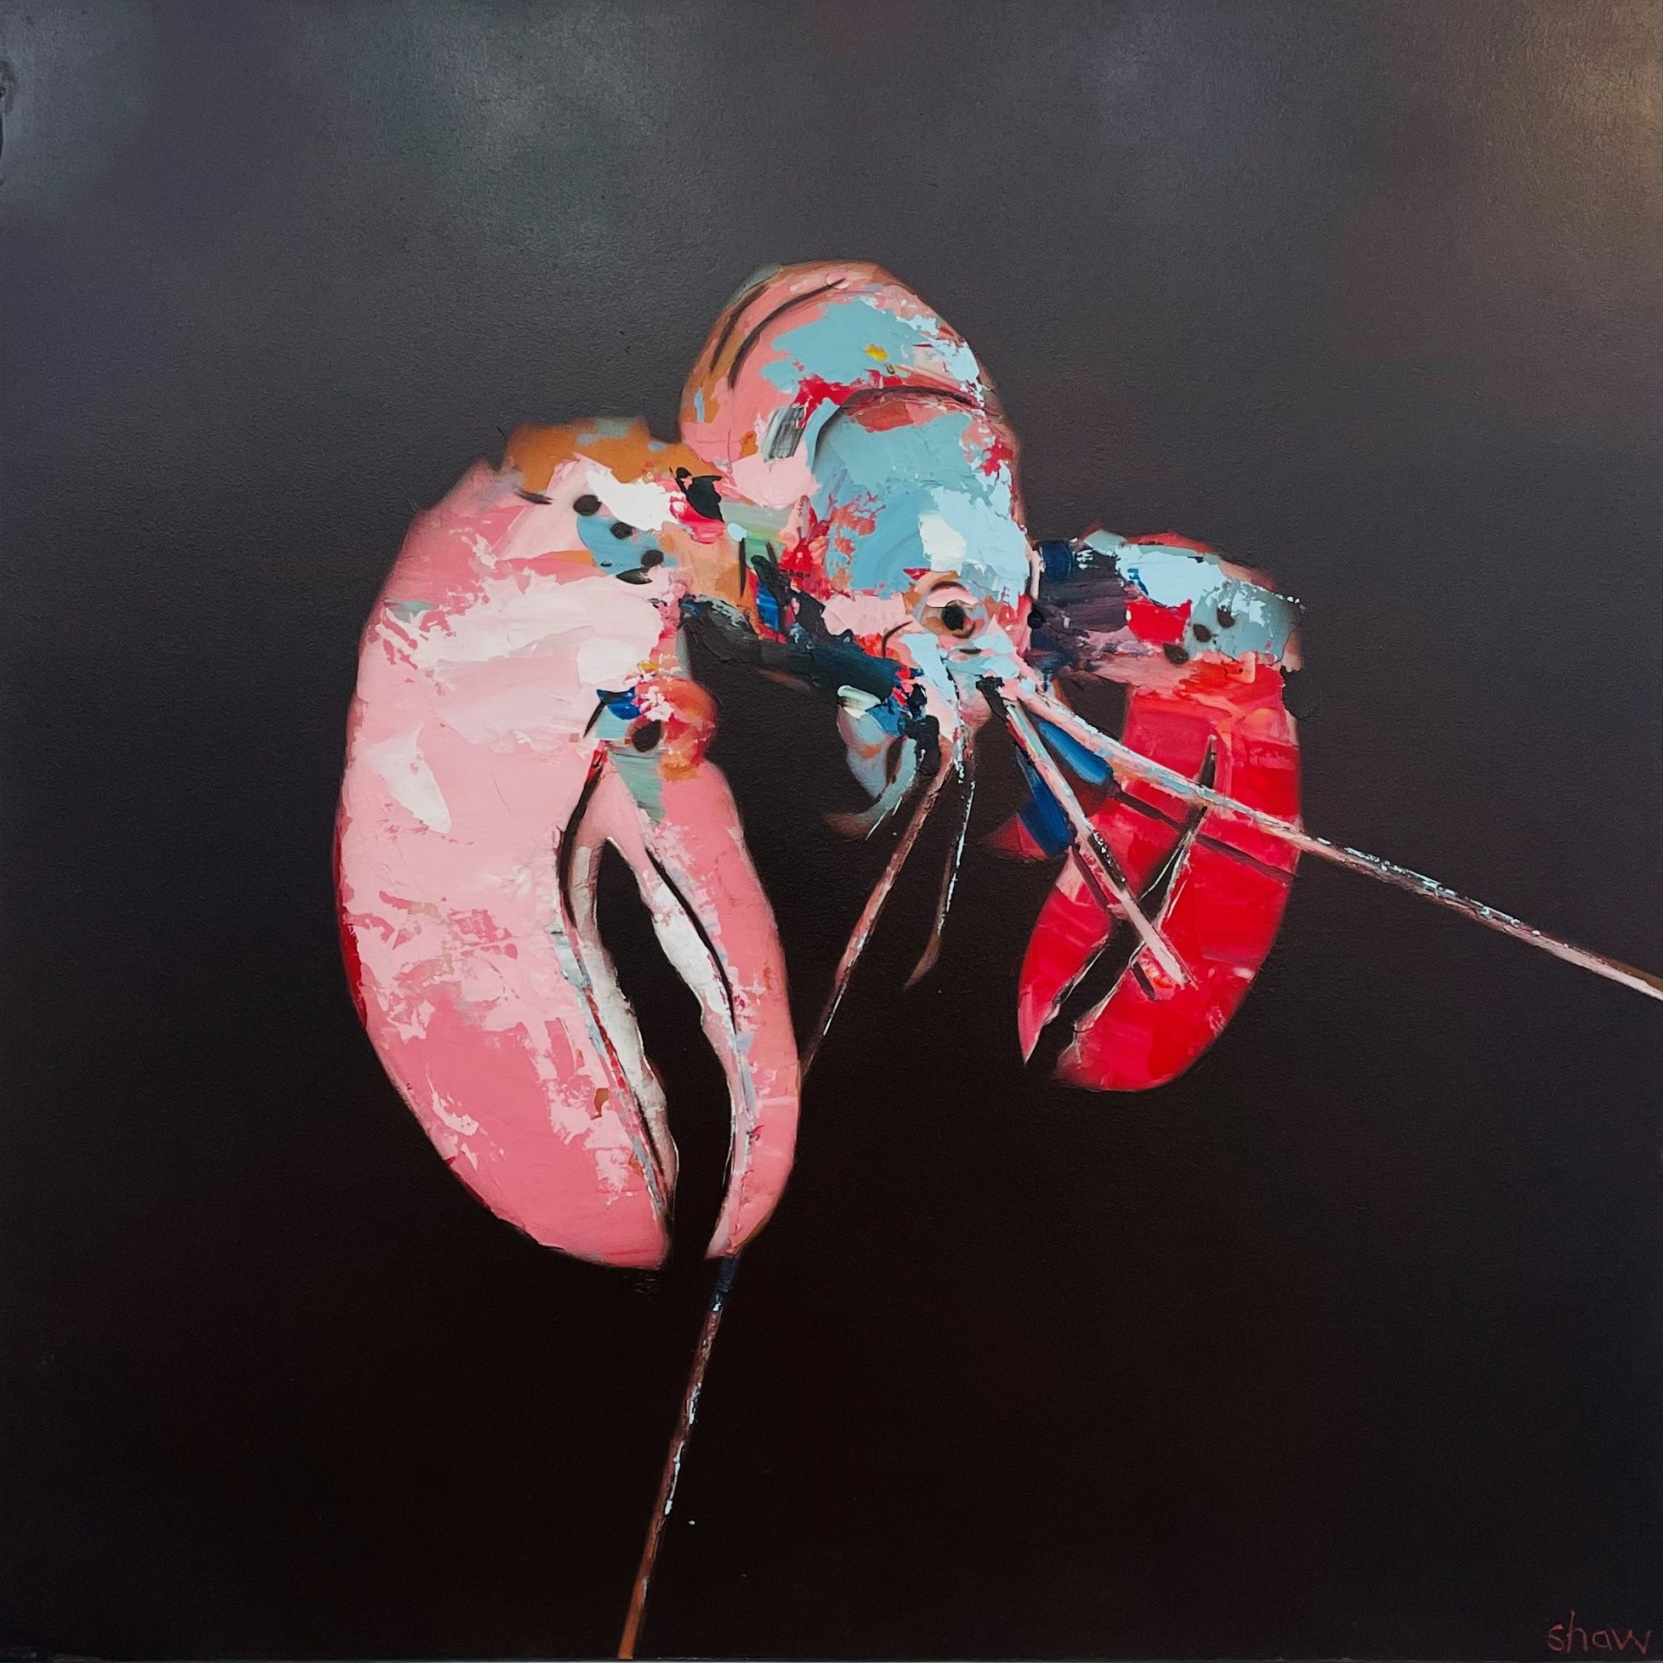 'Lobster I' by artist Rob Shaw